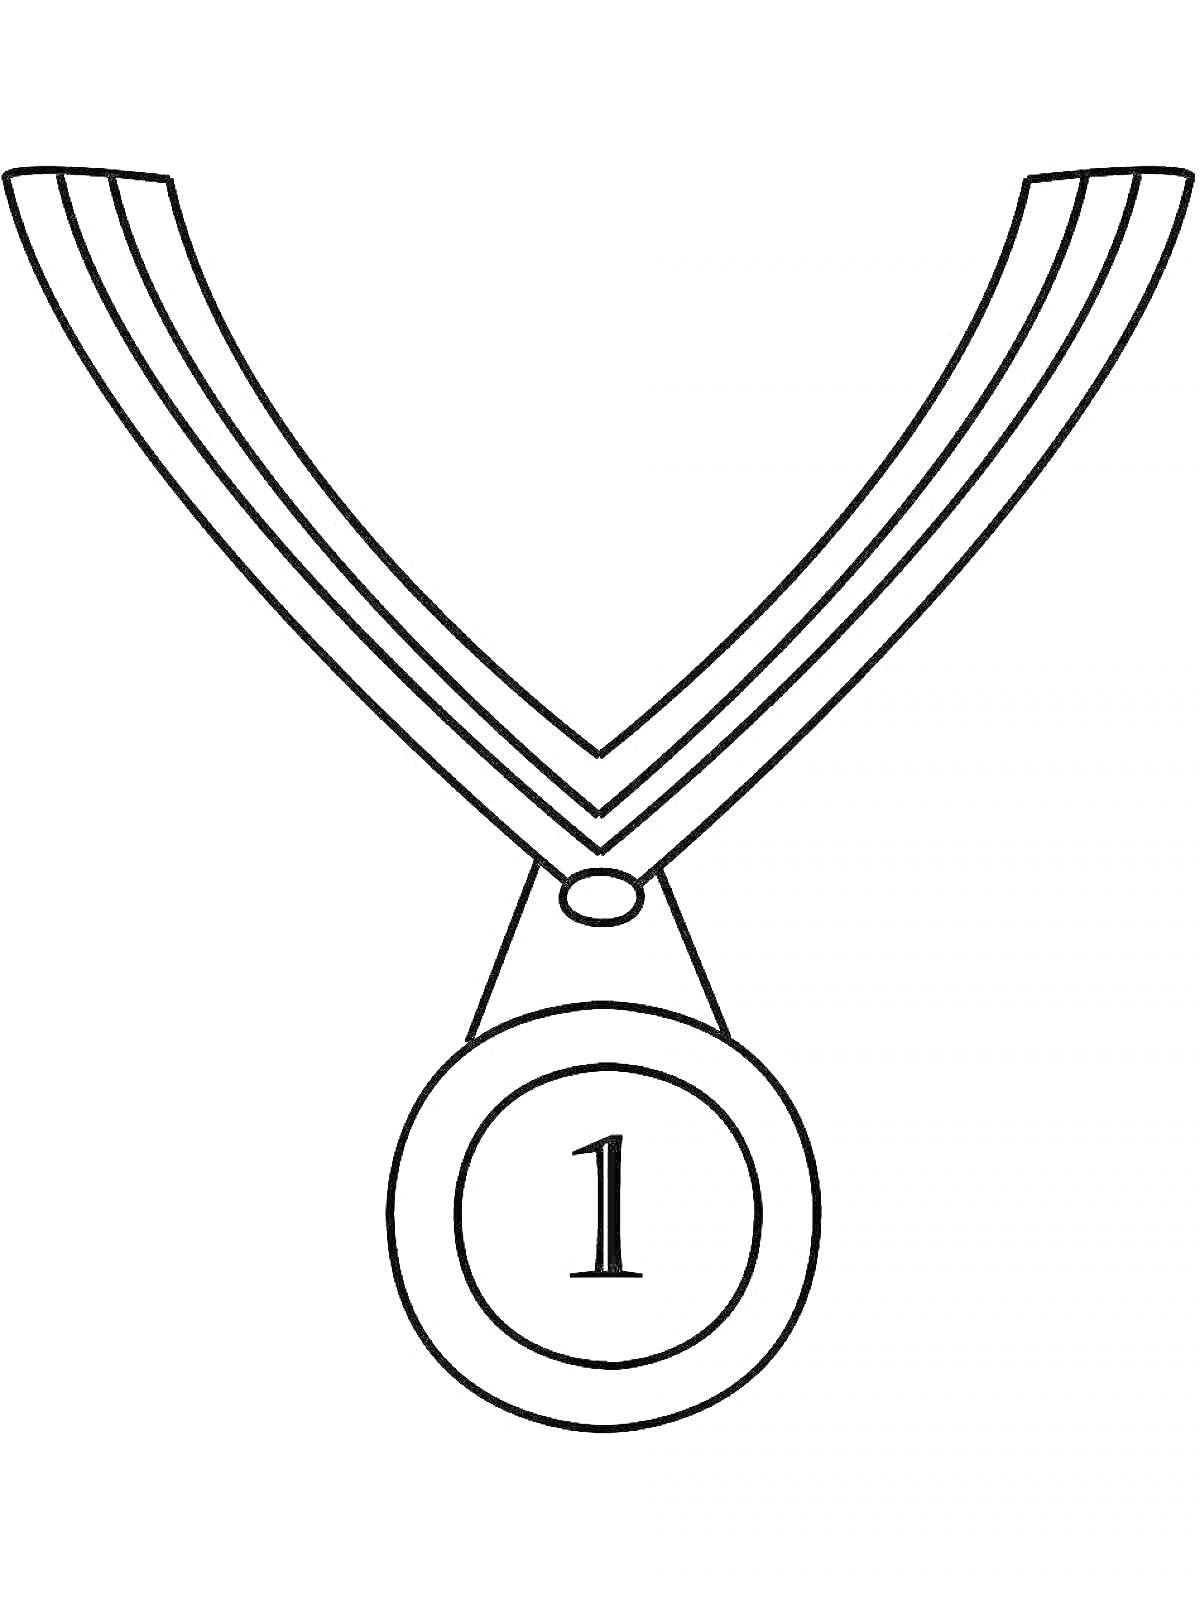 На раскраске изображено: Медаль, Лента, Победа, Цифра 1, Контур